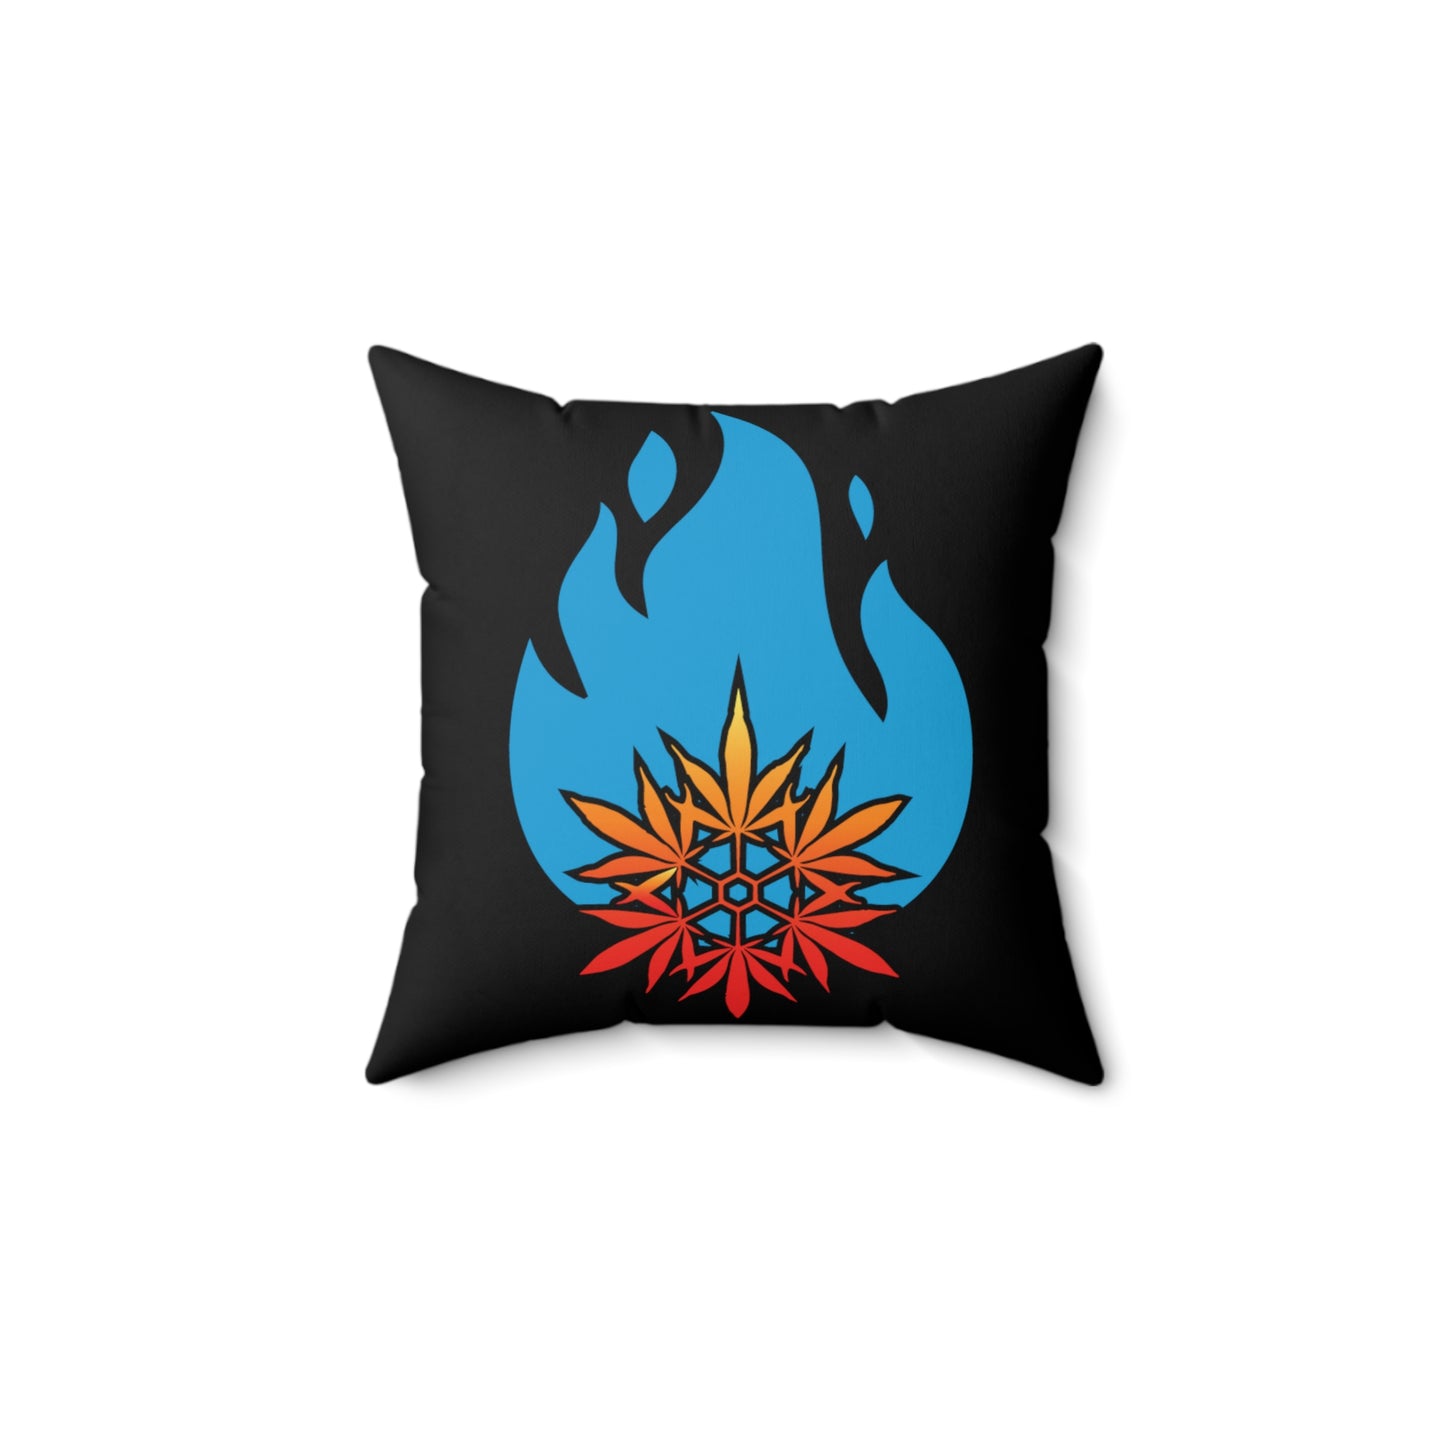 Frost n Fire Pillow 14x14in